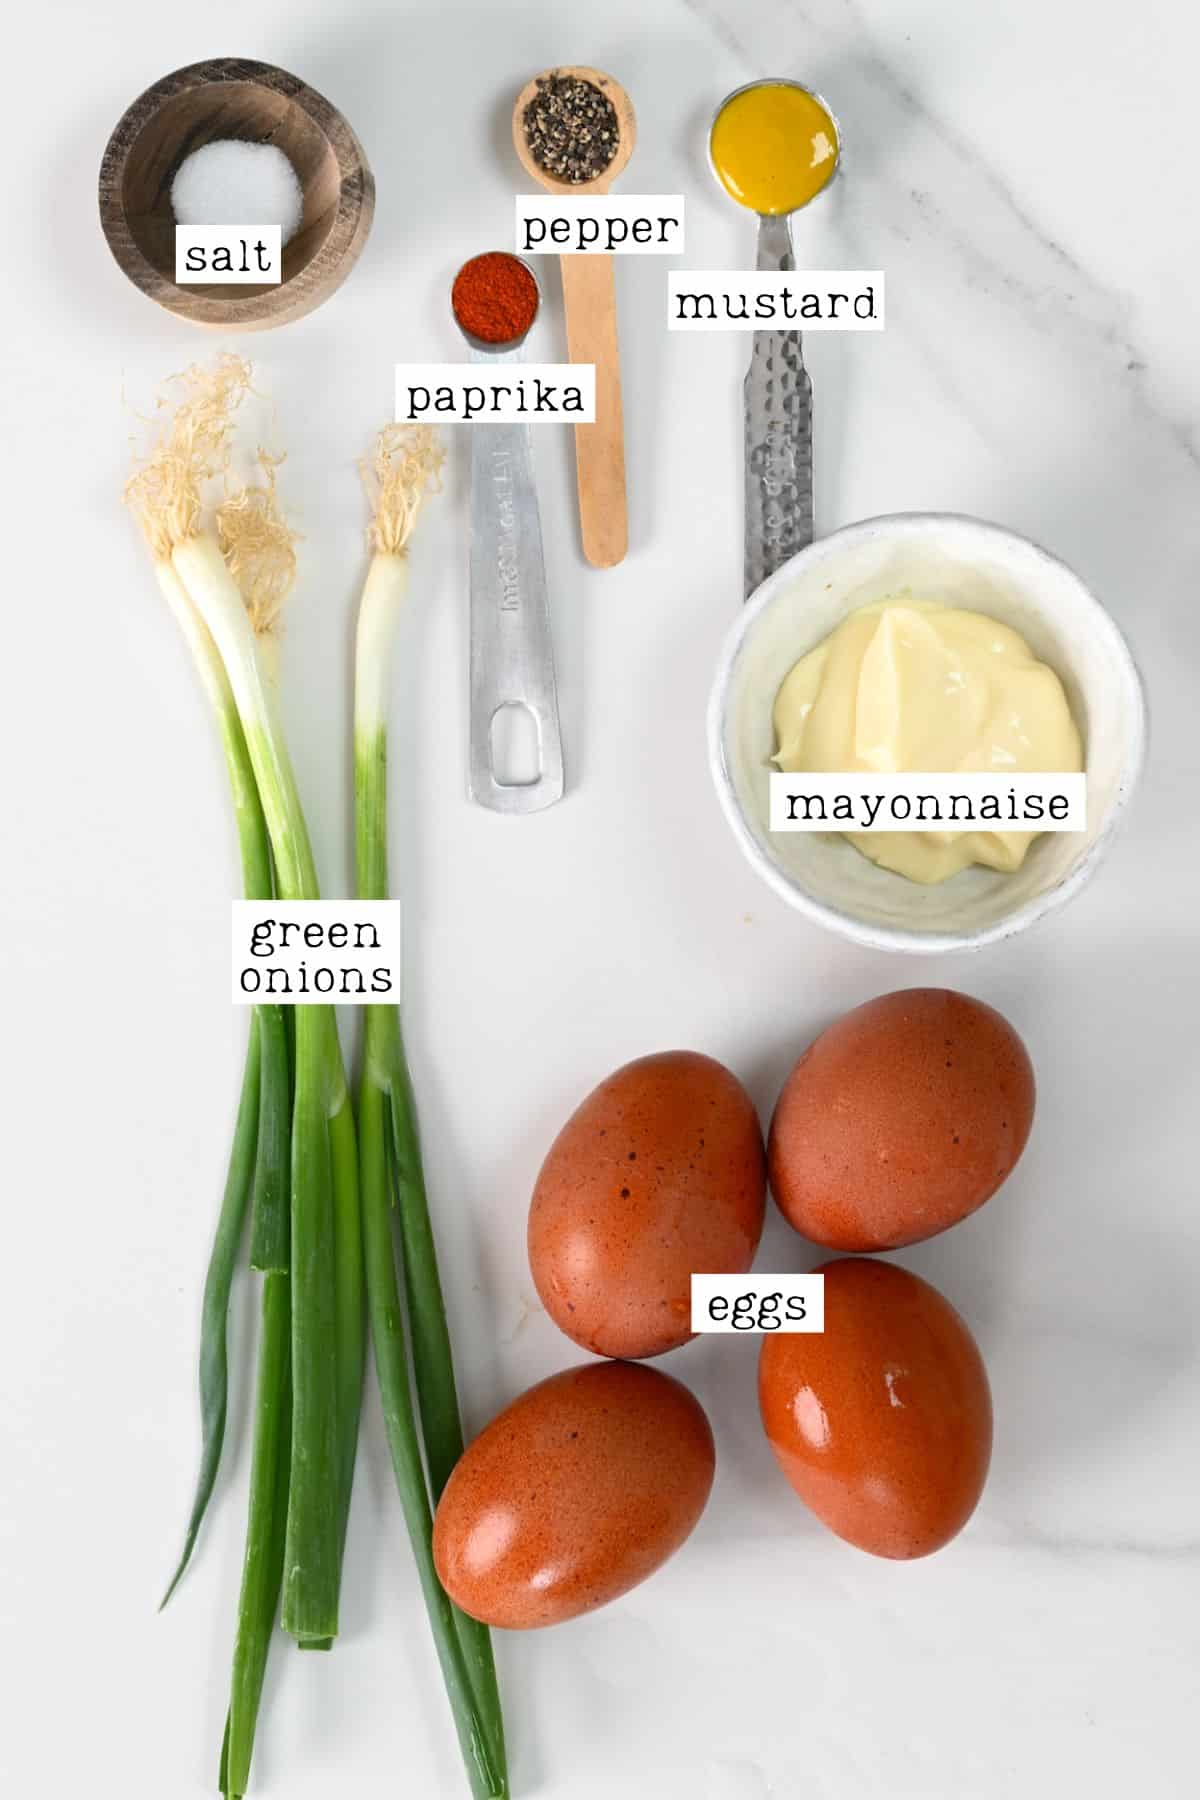 Ingredients for eggs salad